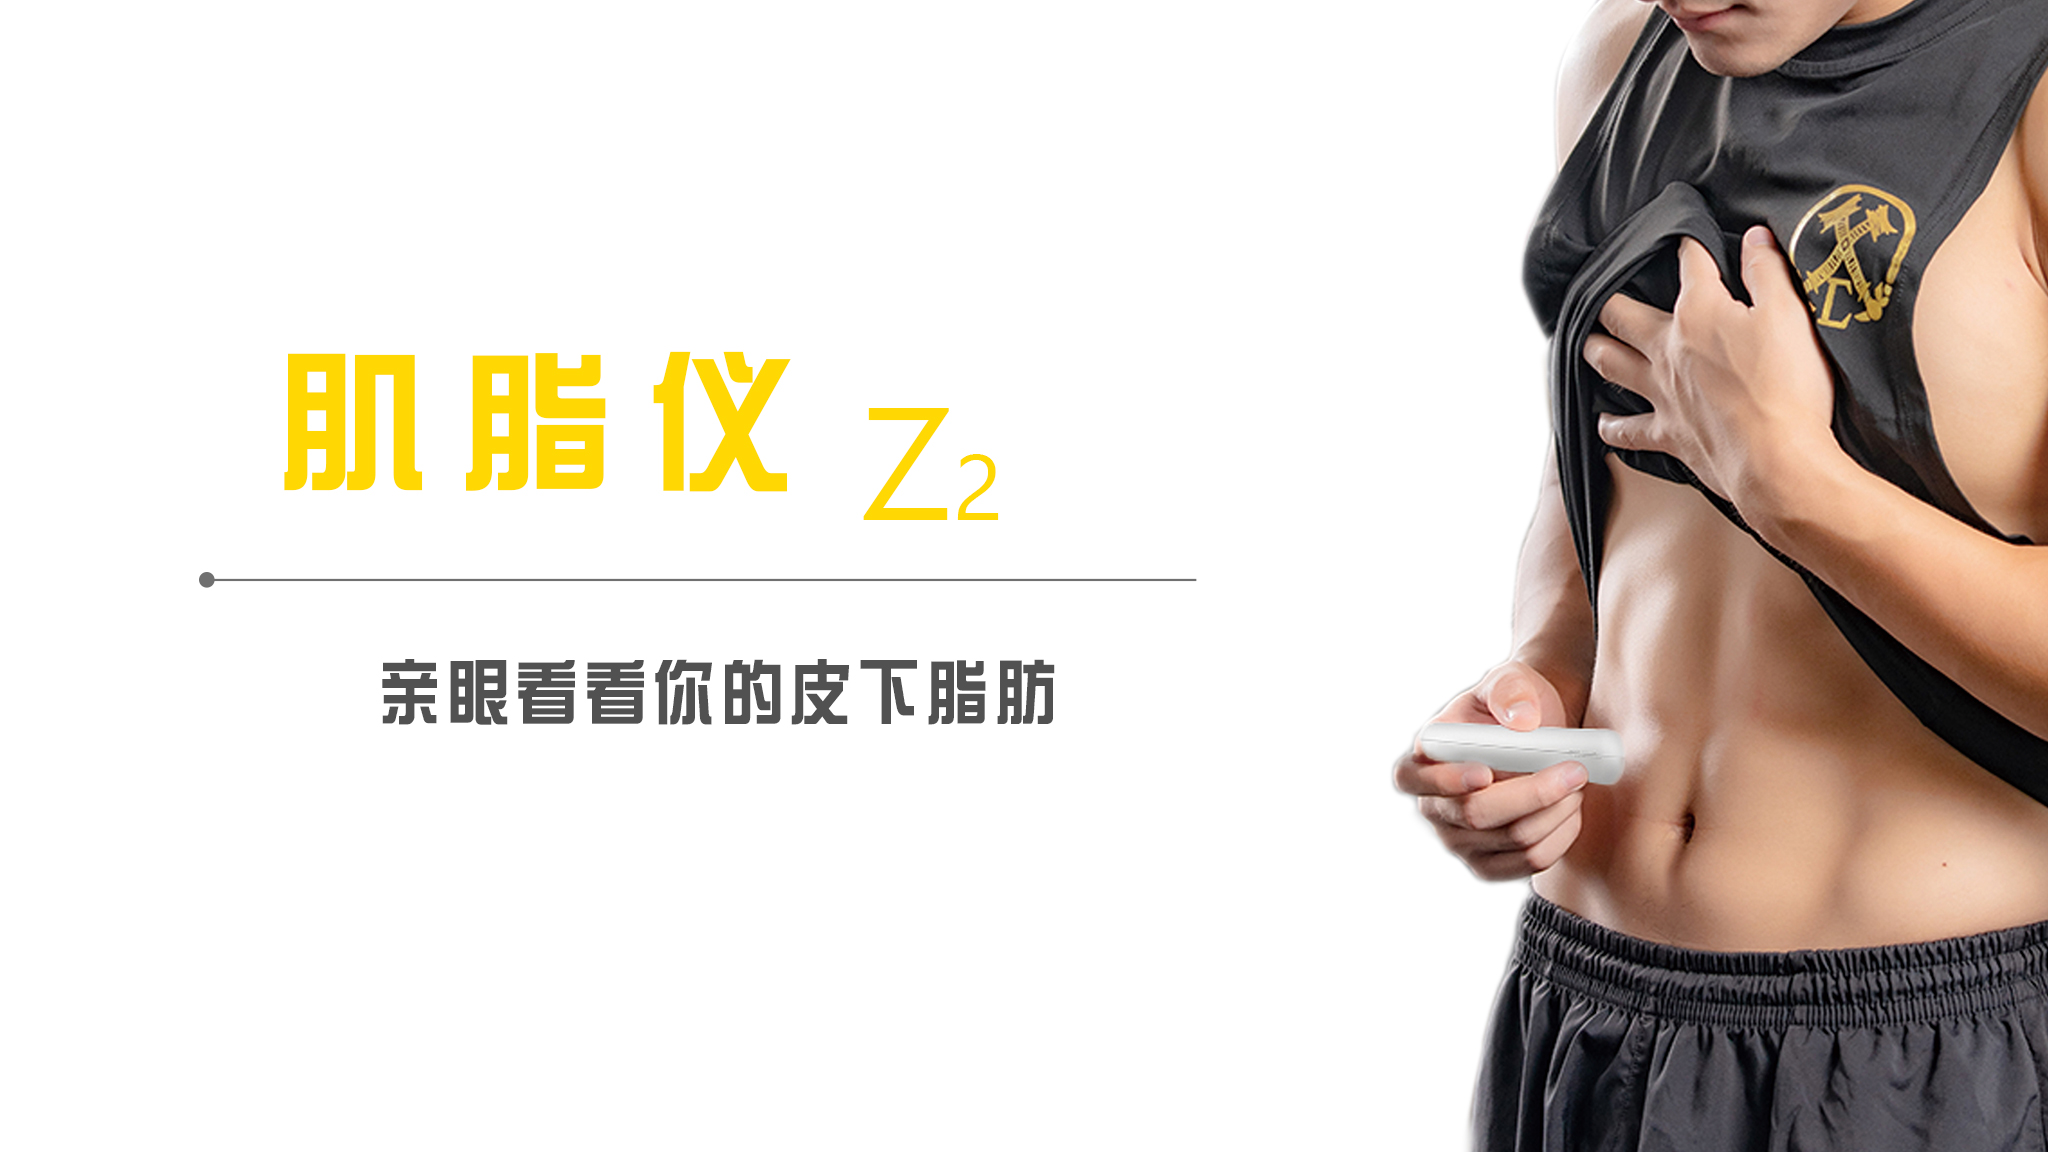 Z2主图中文